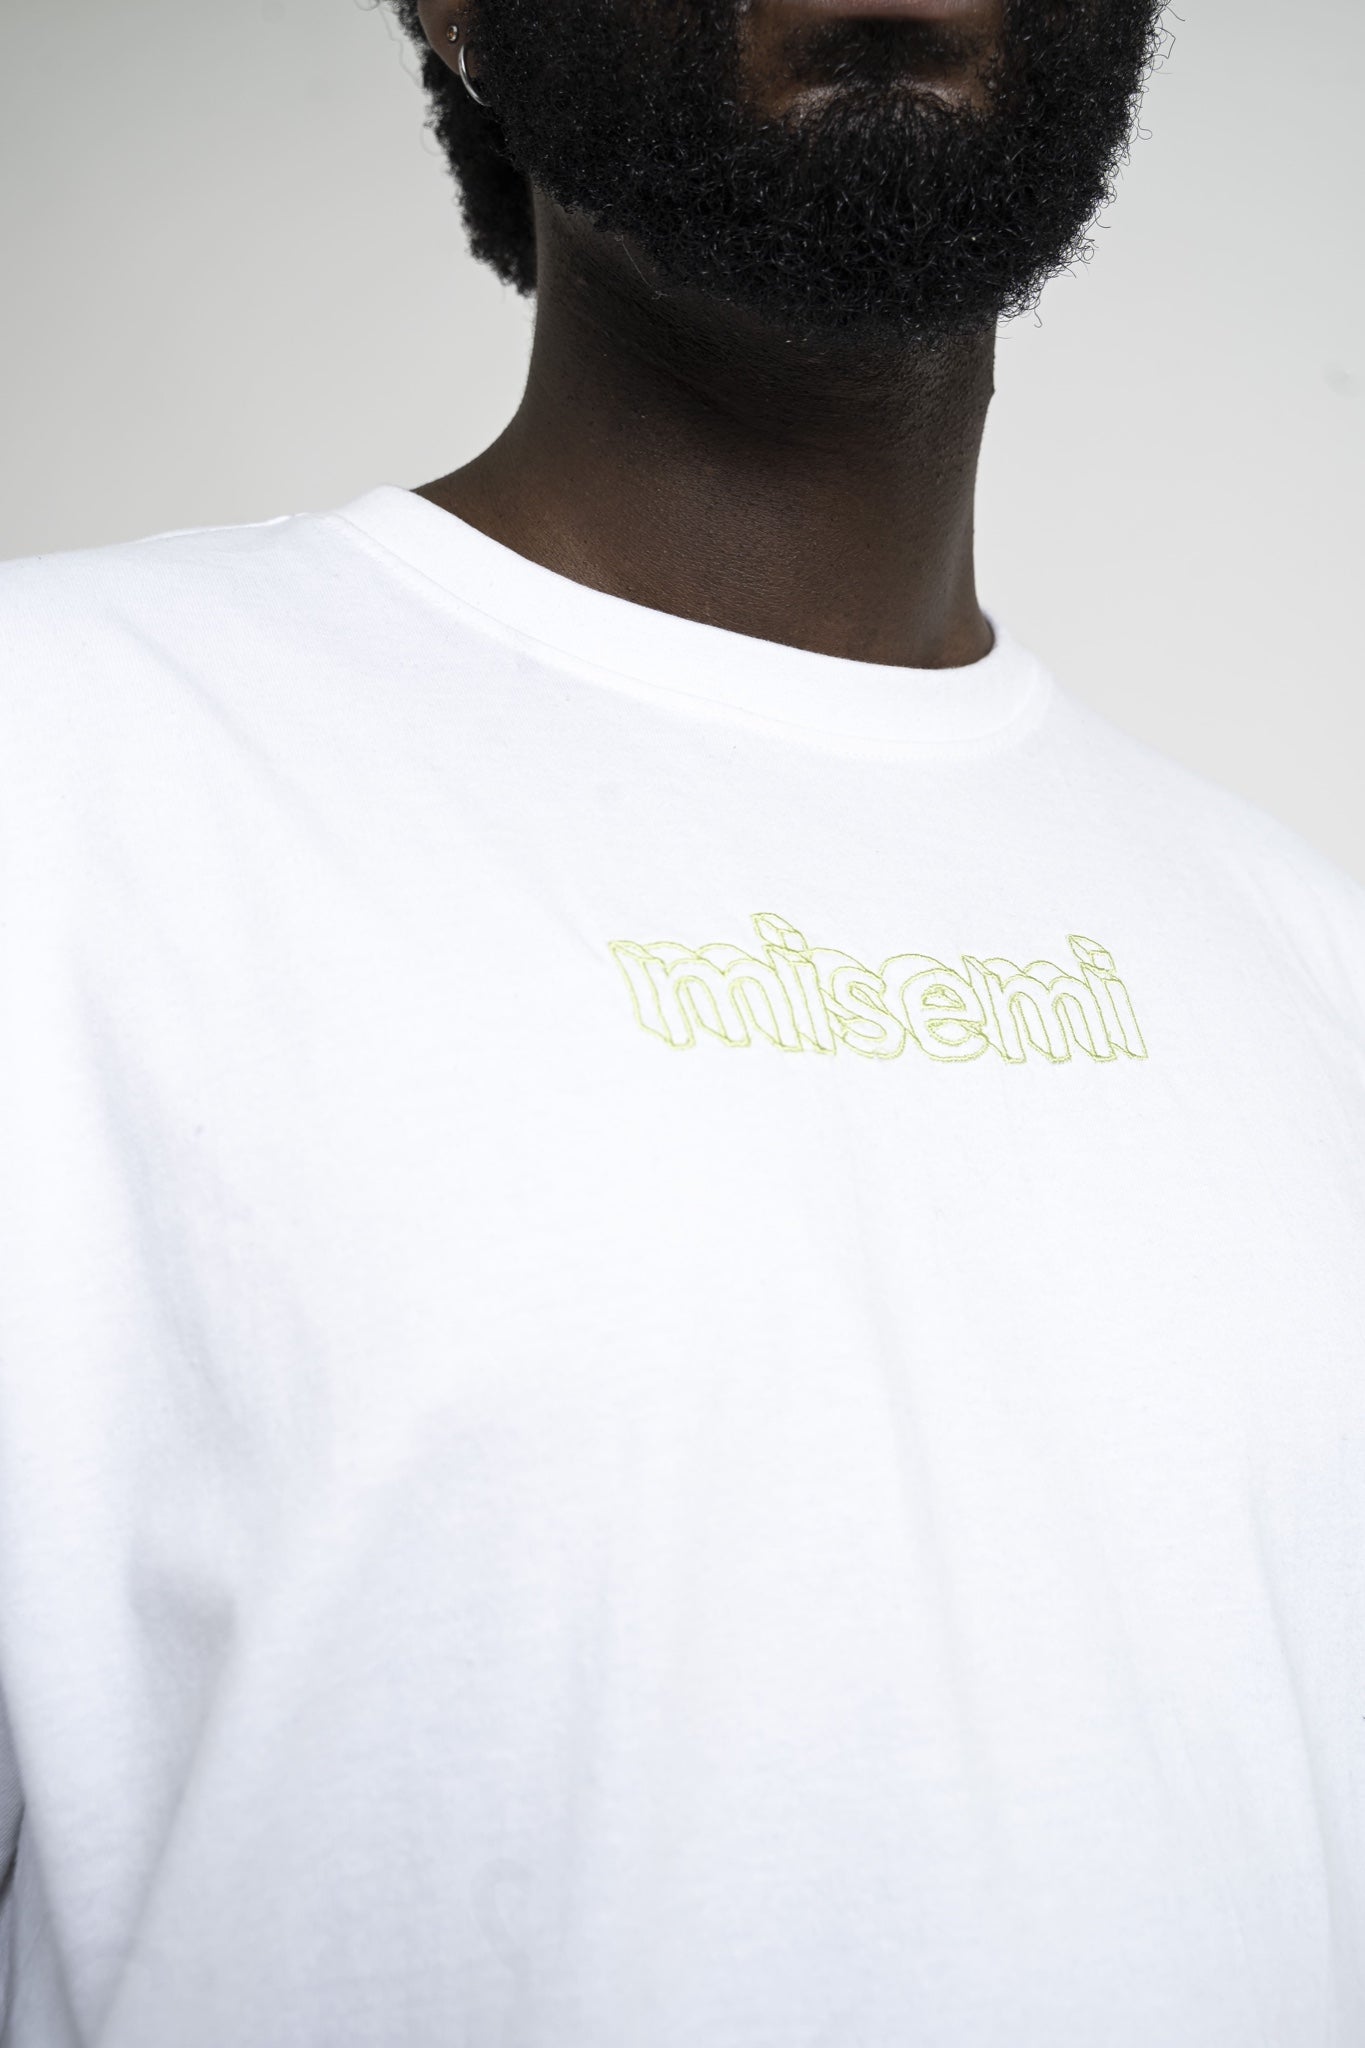 White Embroidered Misemi logo tee